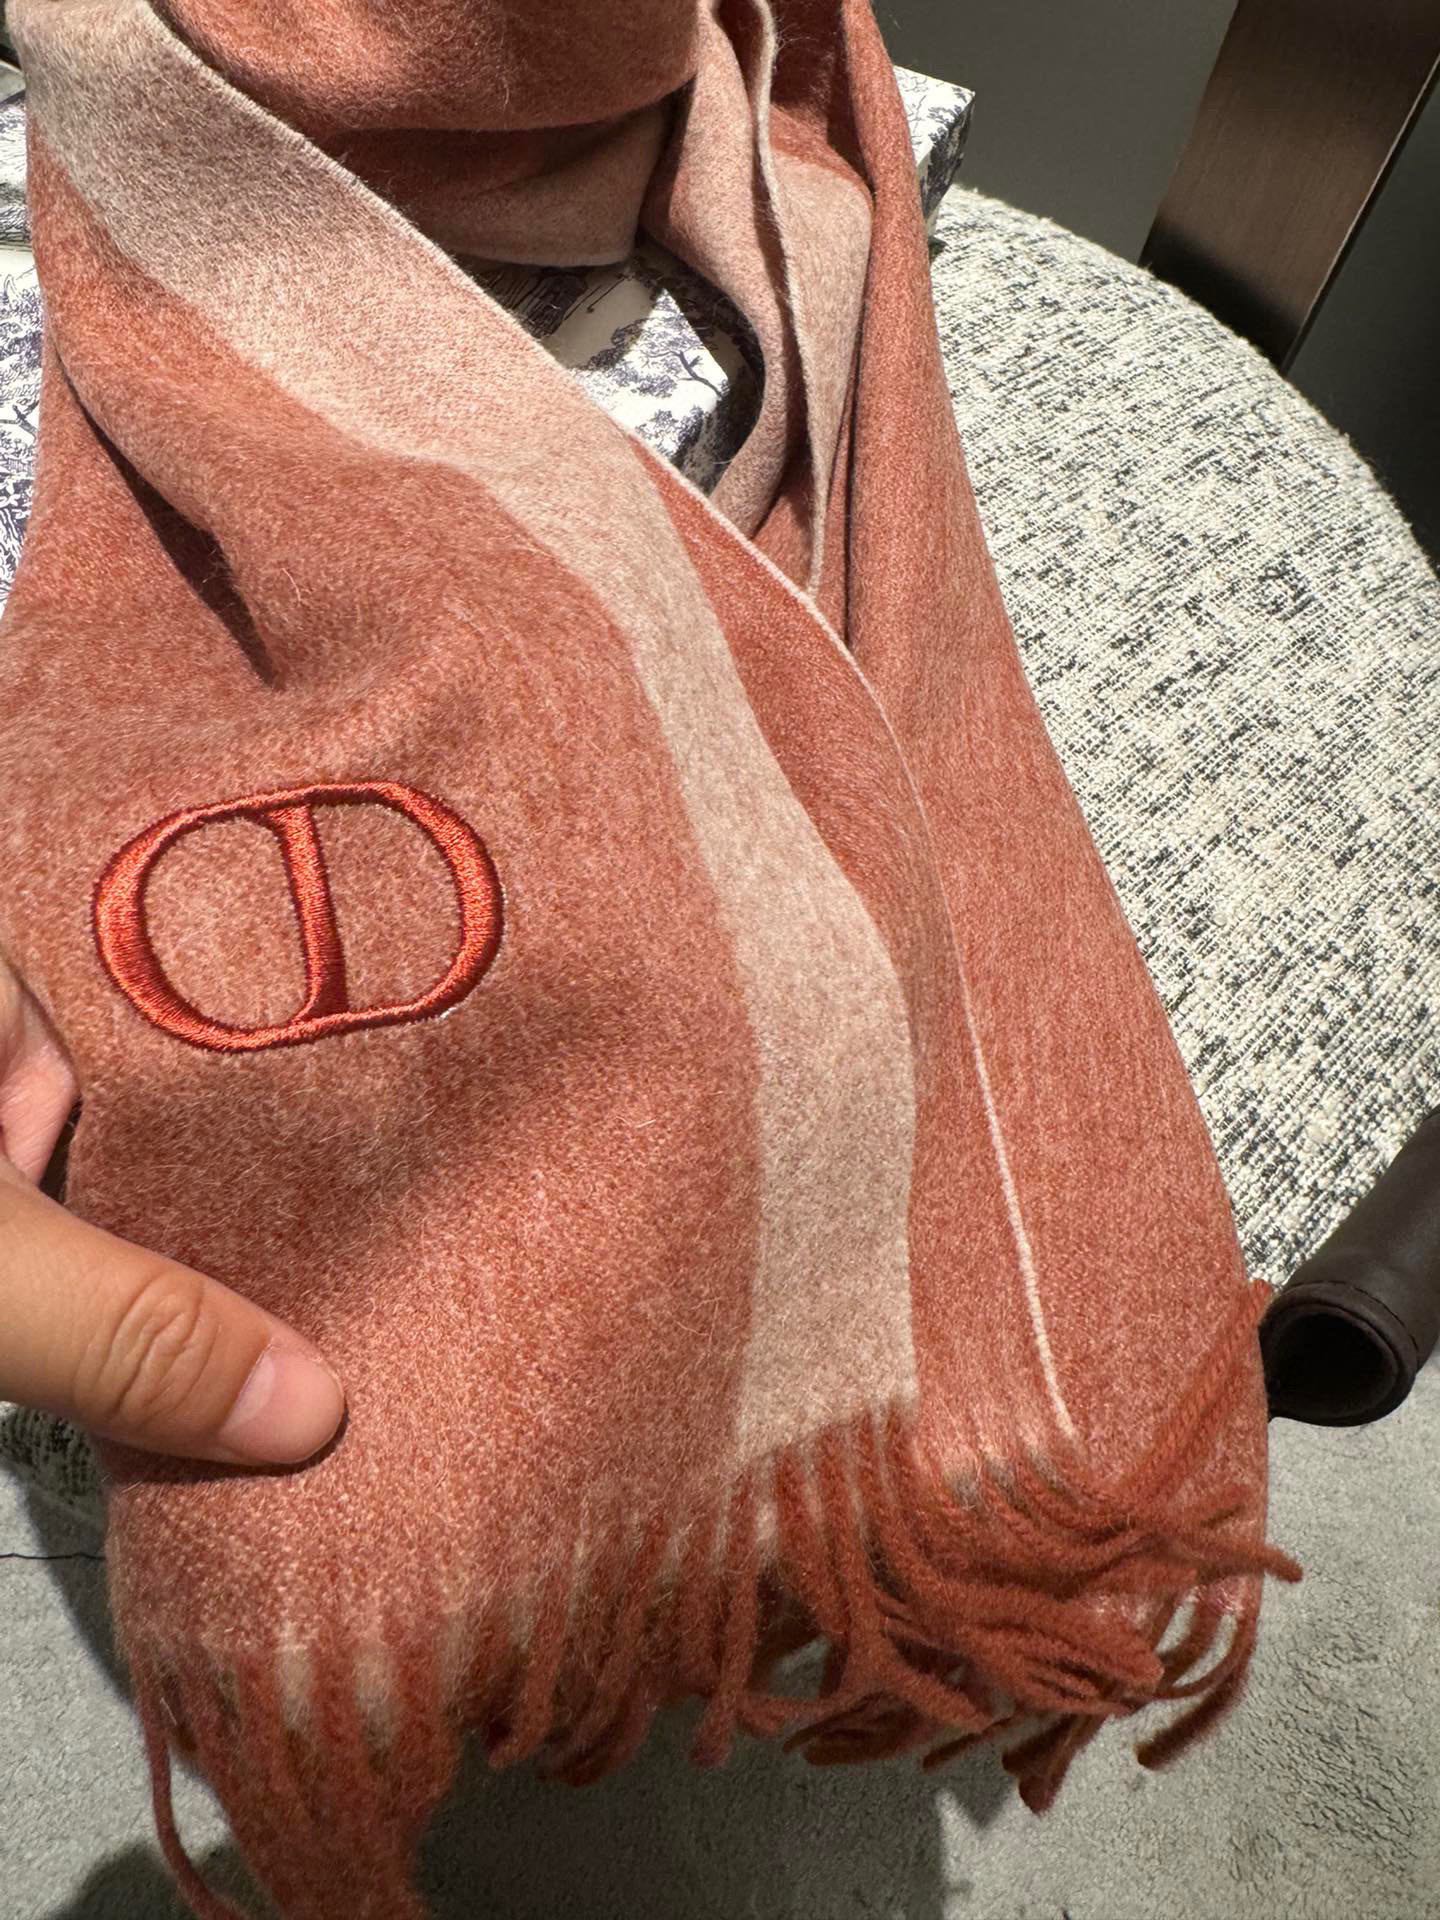 PDior双条长巾️️高尖端产物️水波纹绝对令人尖叫的品质LOGO绣标低调奢华有内涵此款围巾绝对是犒赏自